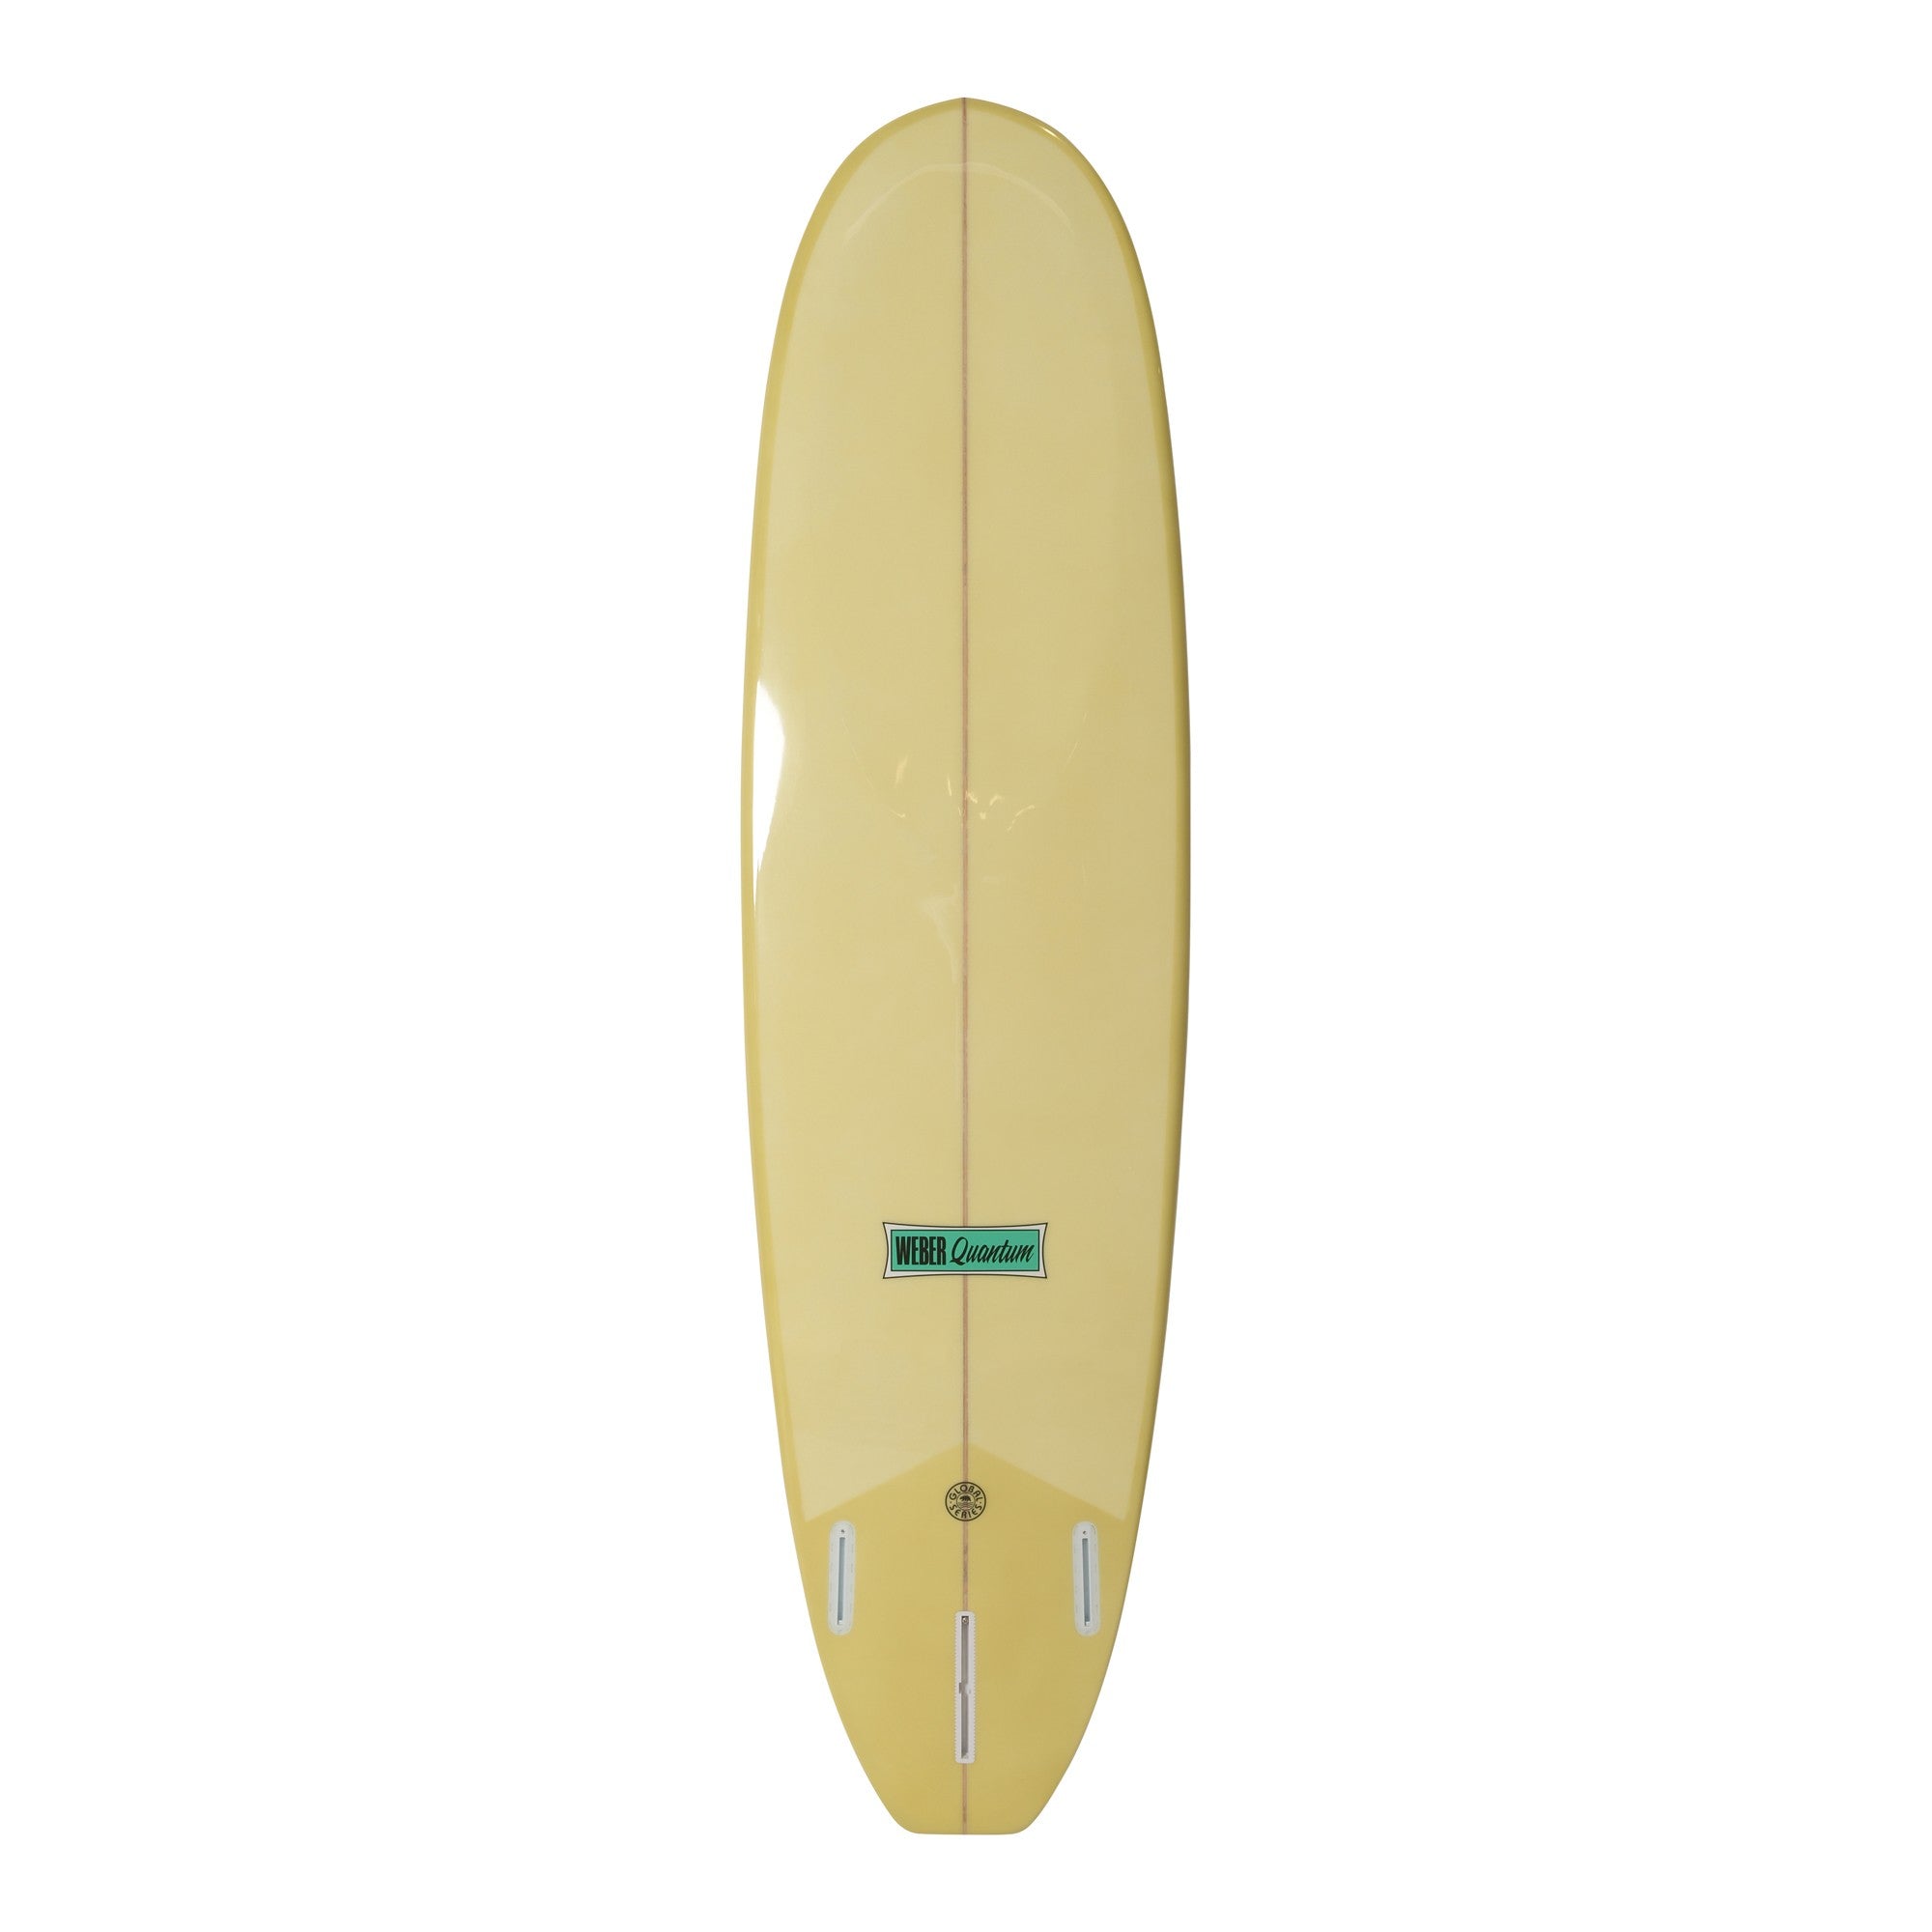 WEBER SURFBOARDS - Quantum 7'6 - Sand